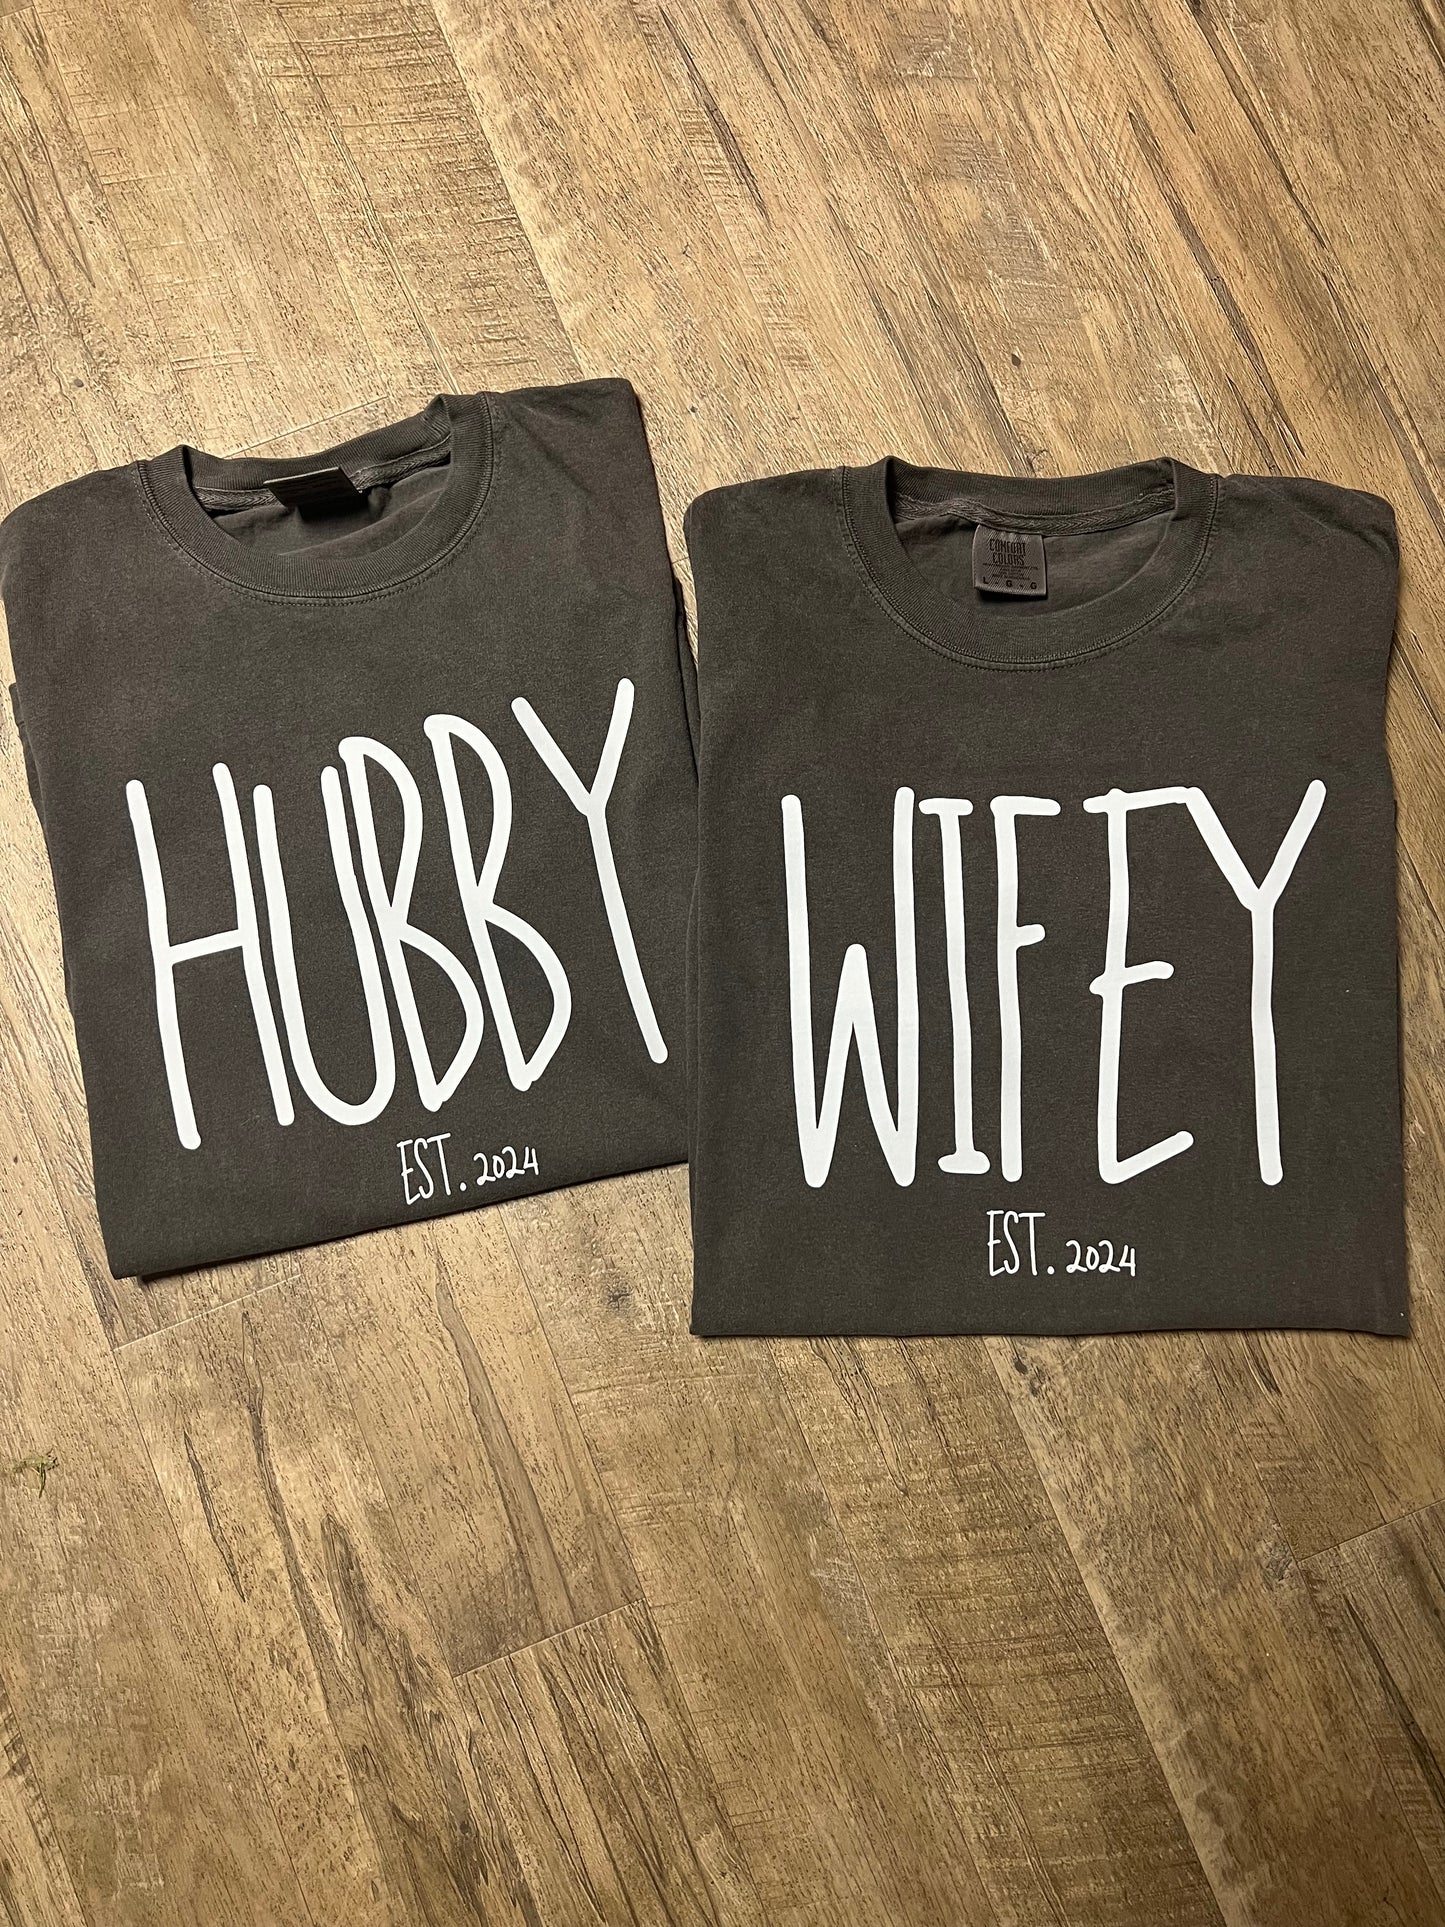 Hubby & Wifey Tees